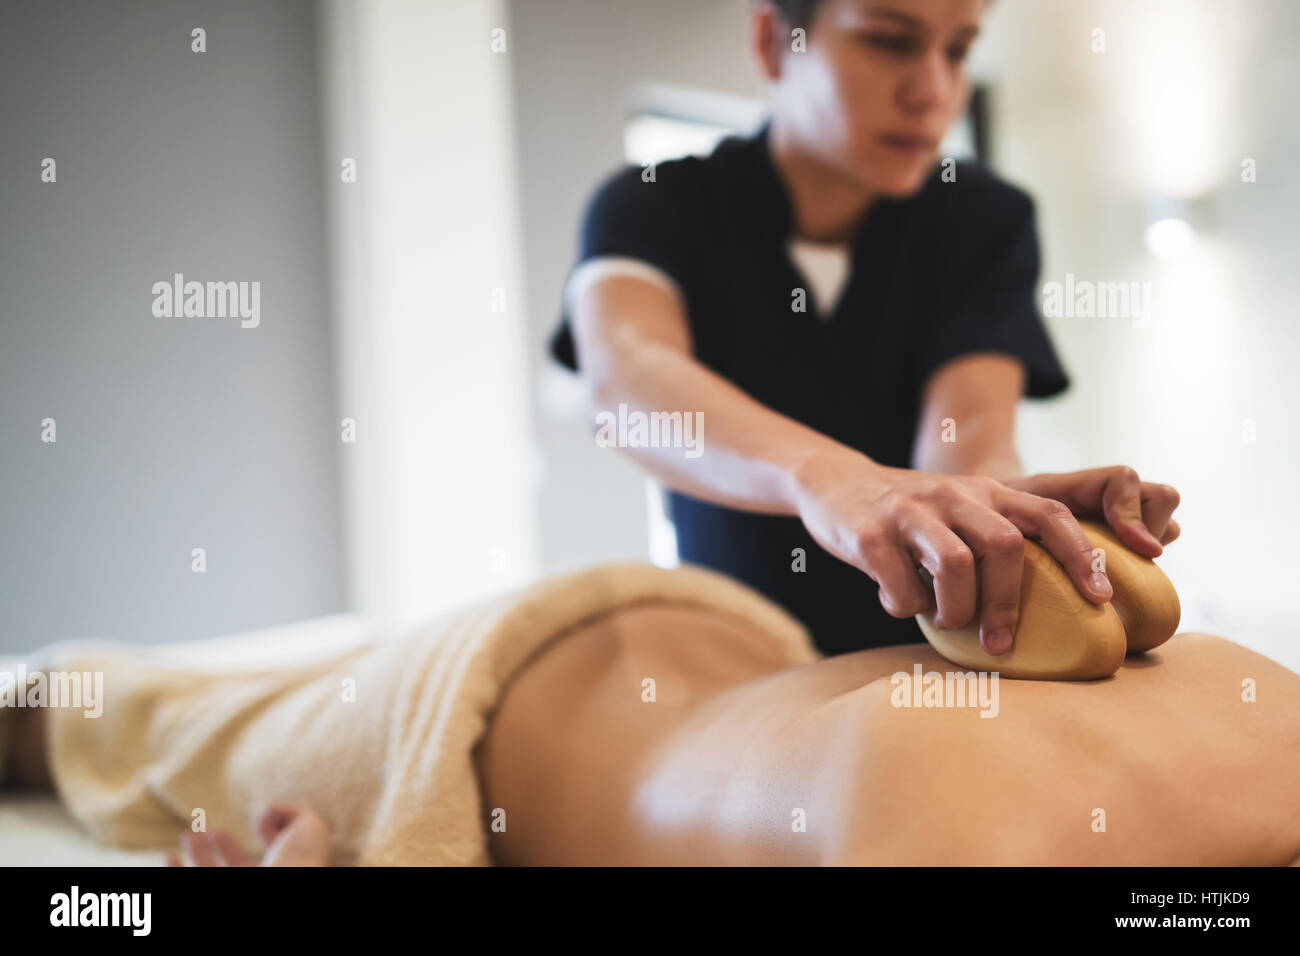 Cliend enjoying massage treatment given by masseur Stock Photo